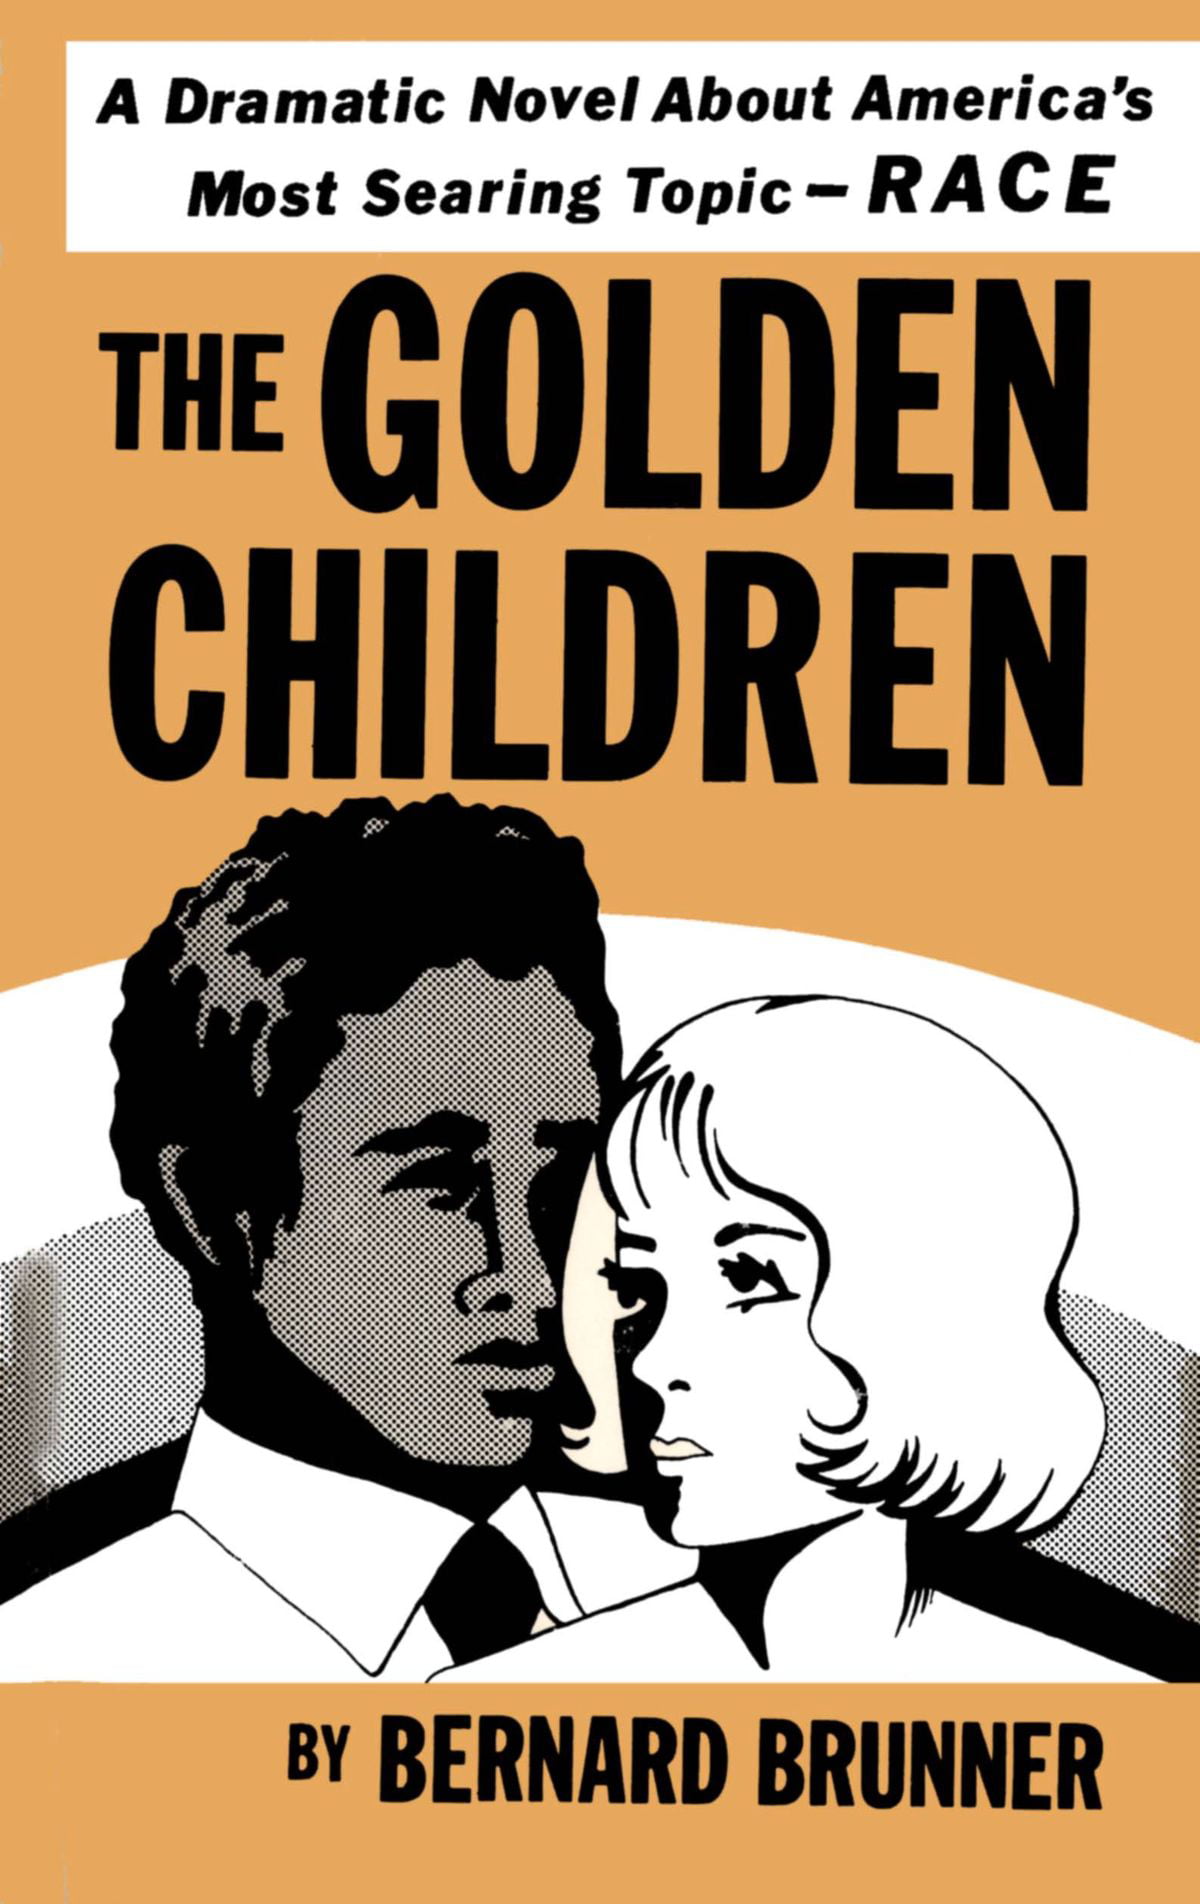 The Golden Children - eBook - Walmart.com - Walmart.com